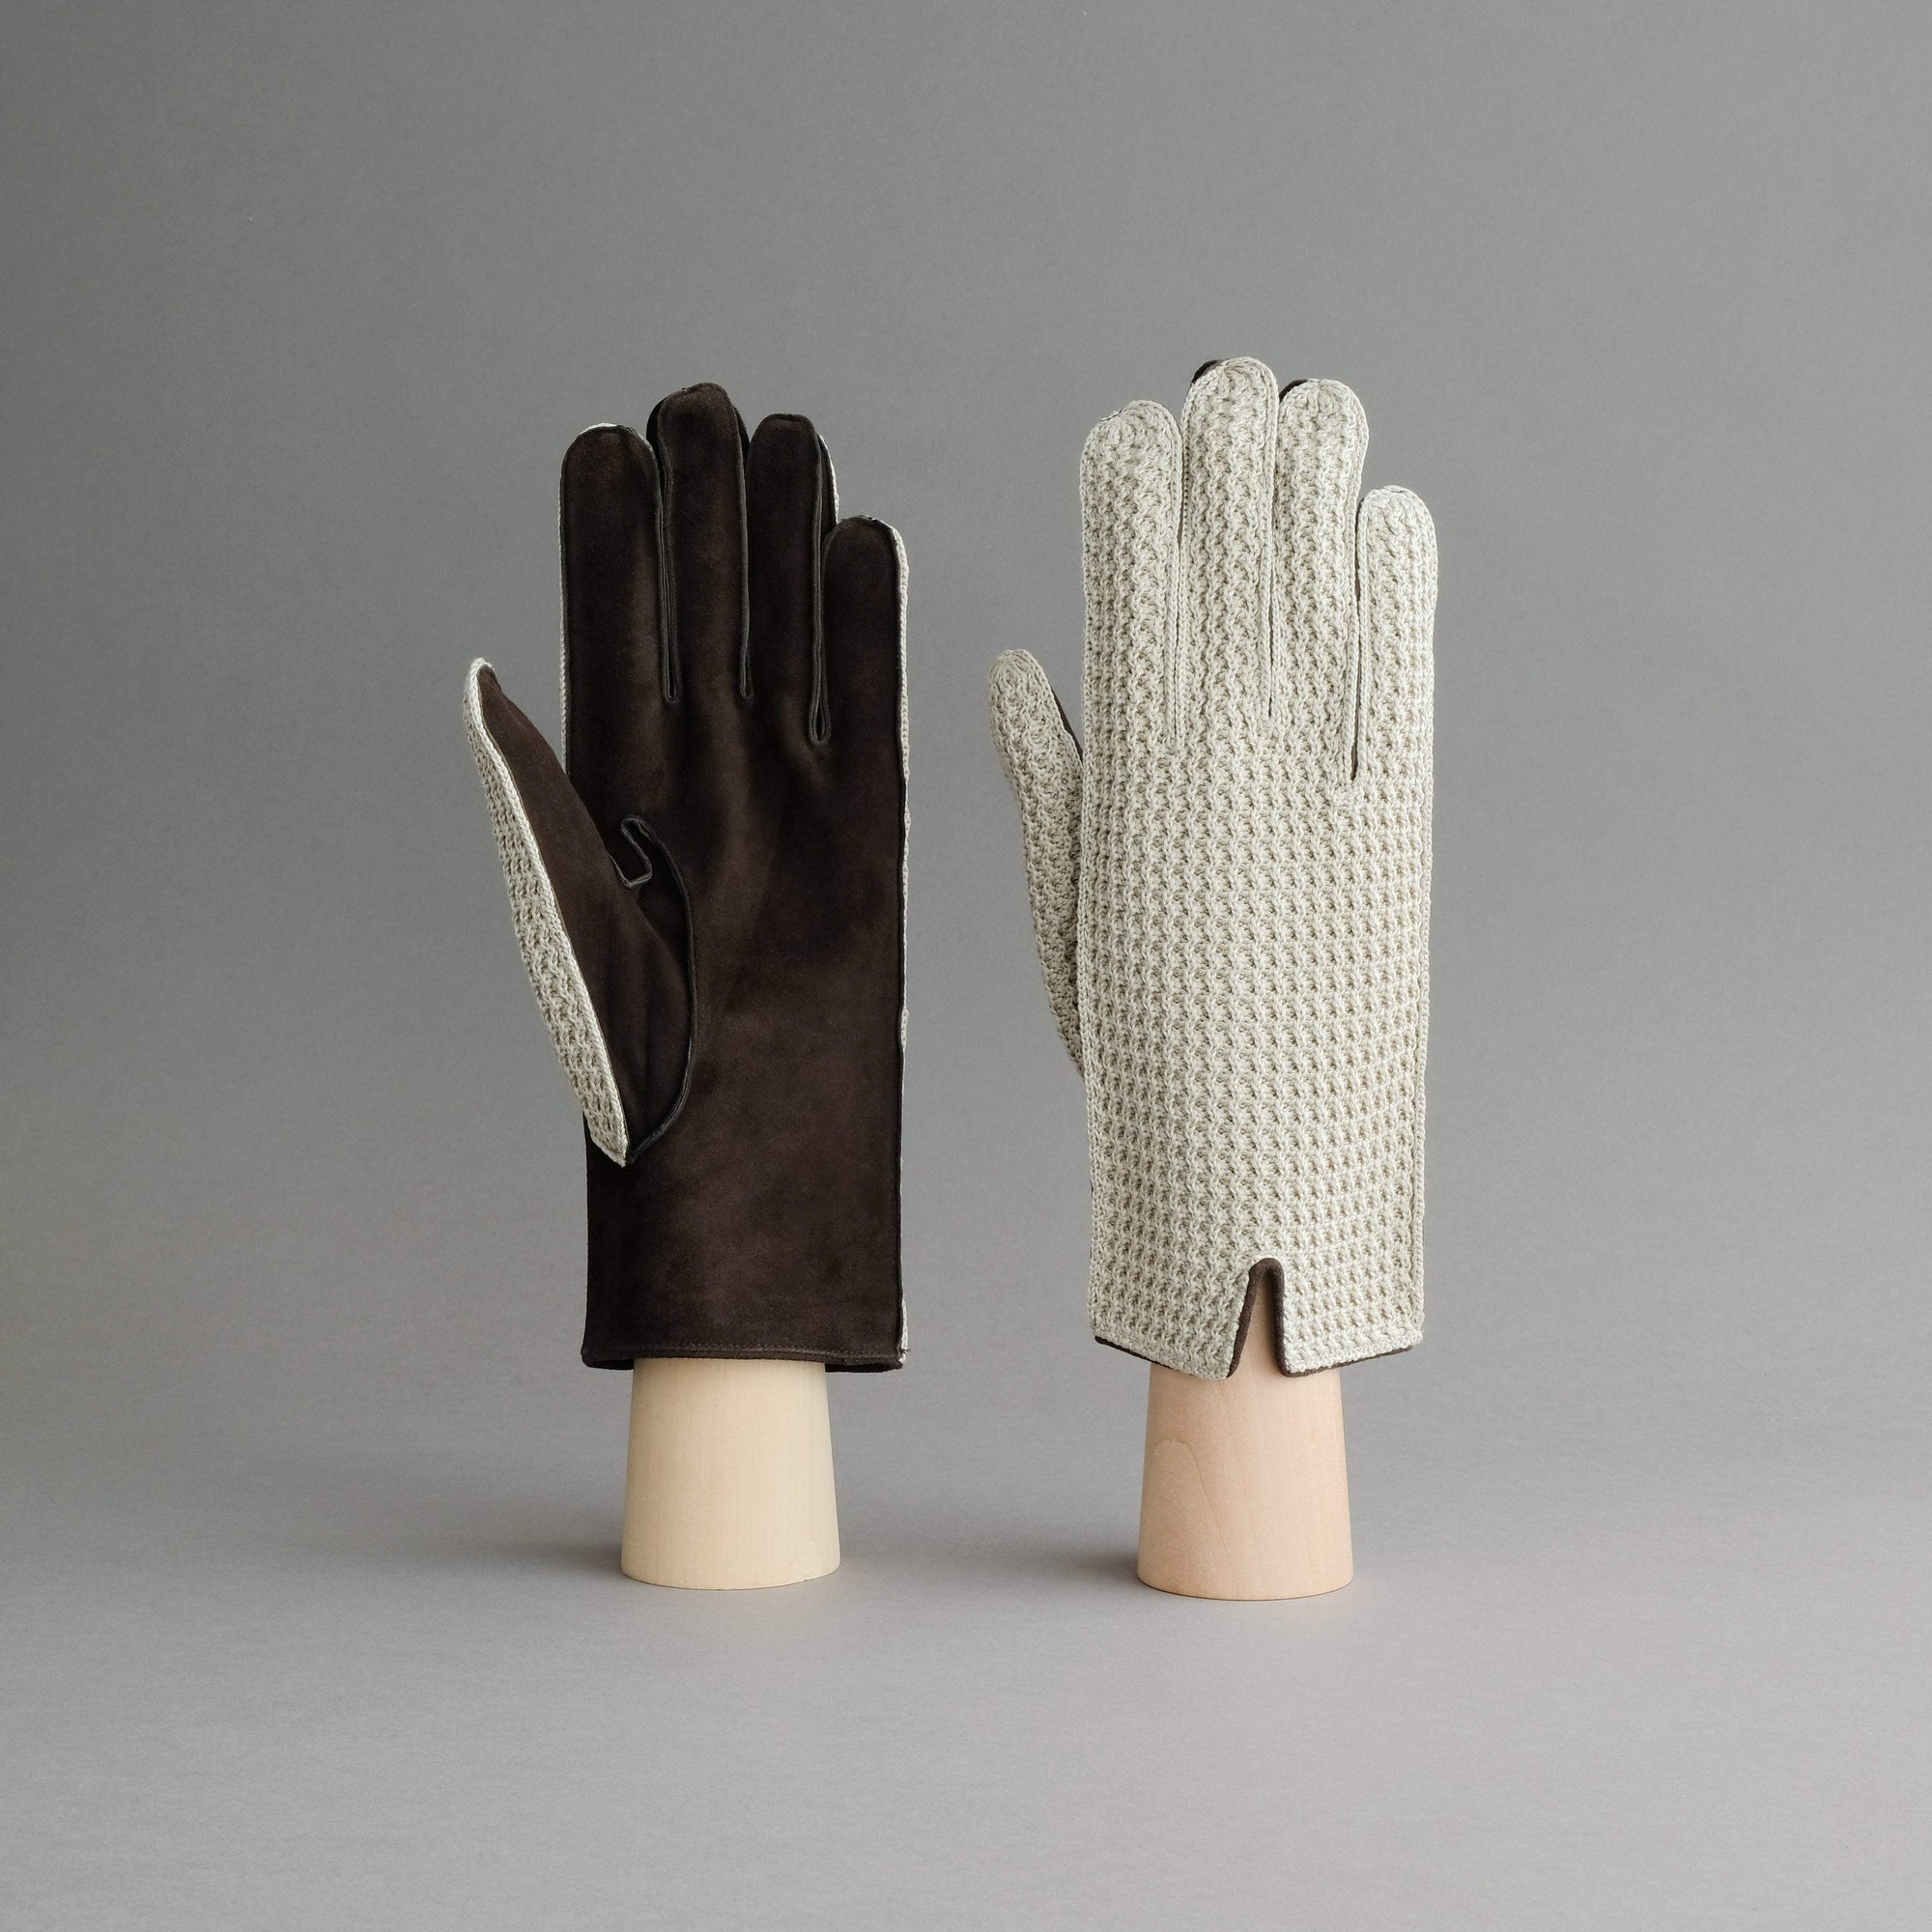 Gentlemen's Unlined Gloves from Goatskin and Cotton Crochet - TR Handschuhe Wien - Thomas Riemer Handmade Gloves